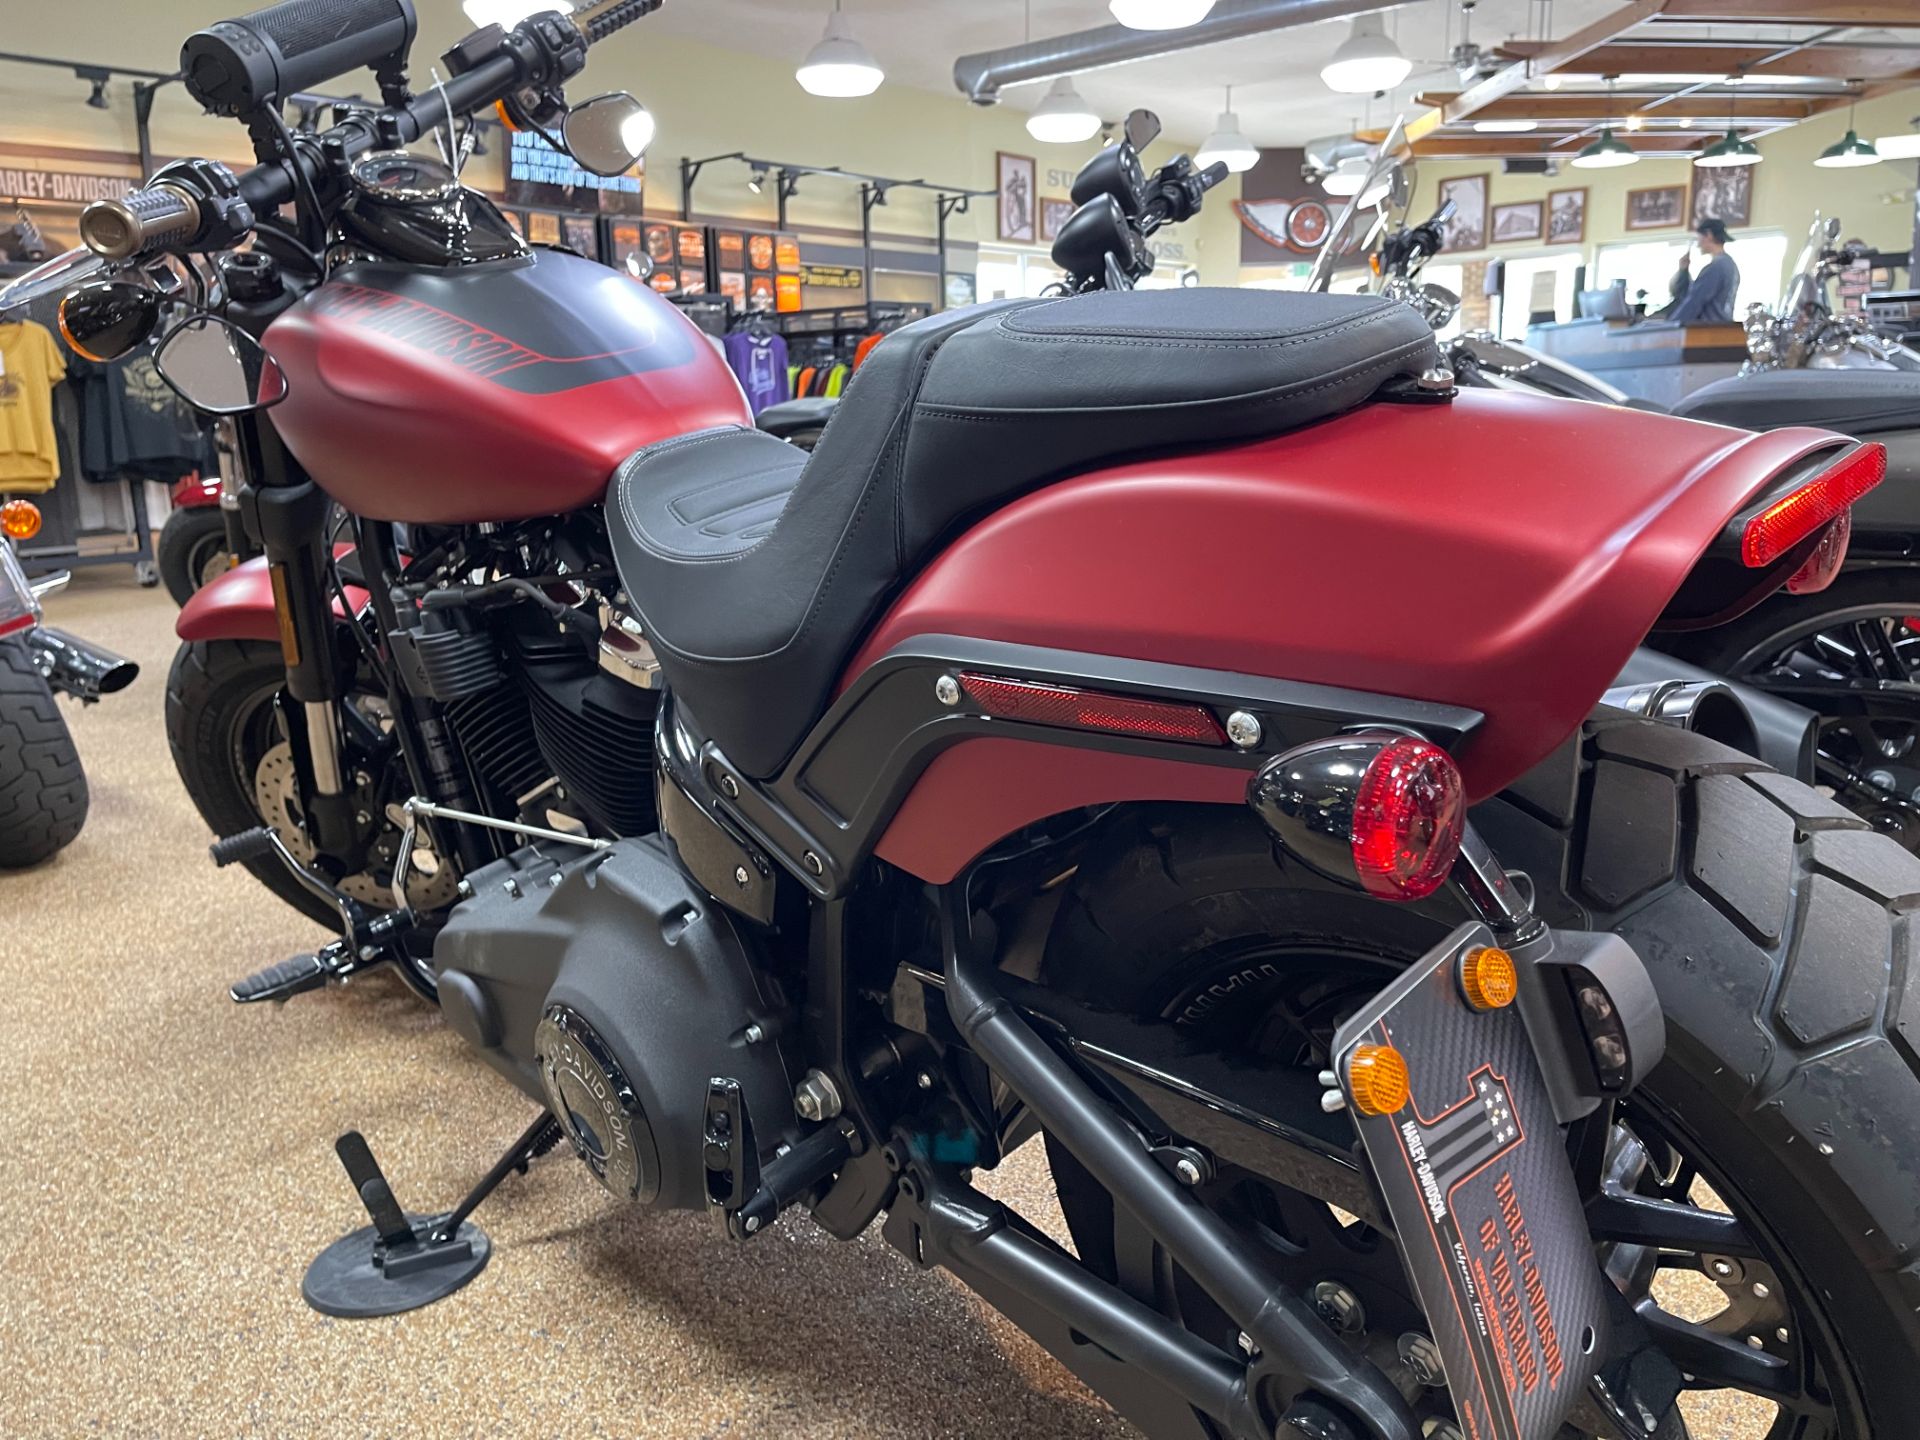 Used 2019 Harley Davidson Fat Bob 107 Motorcycles In Valparaiso In U021278 Wicked Red Denim